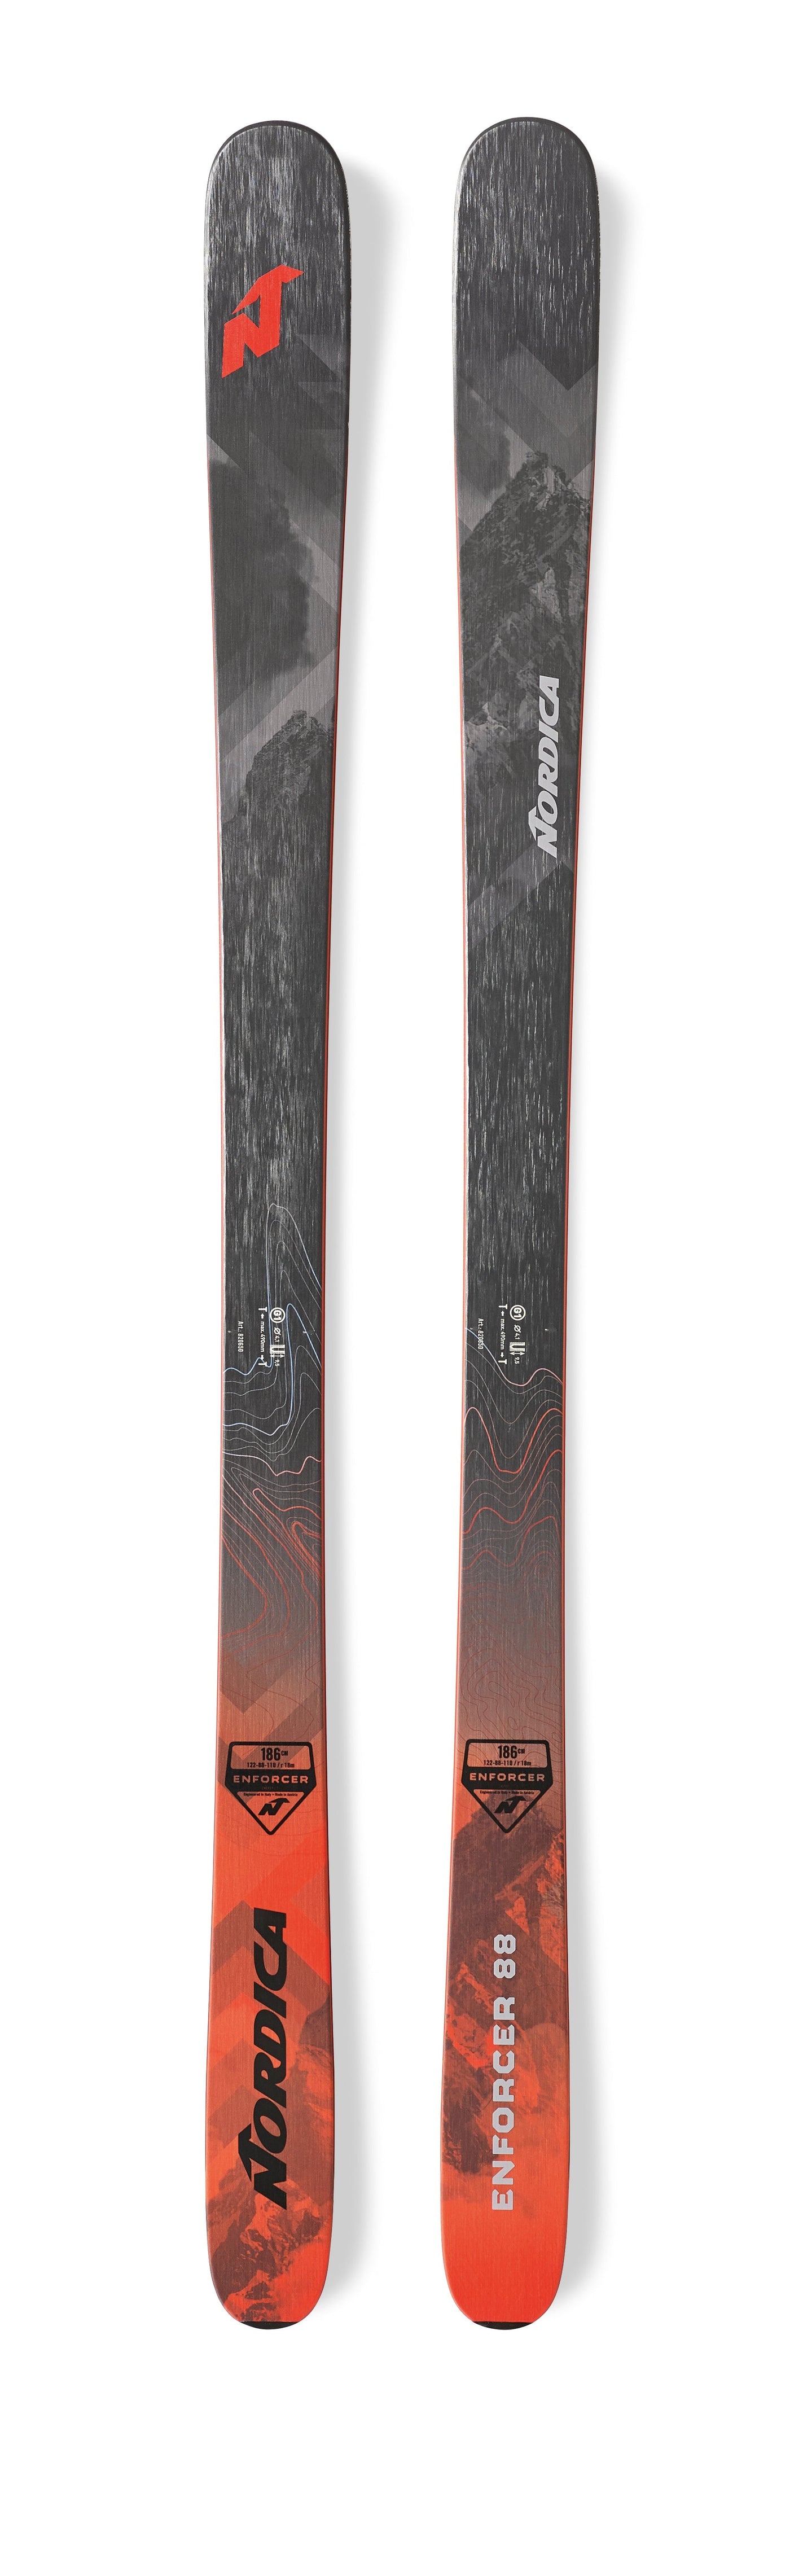 2021 Nordica Enforcer 88 snow skis